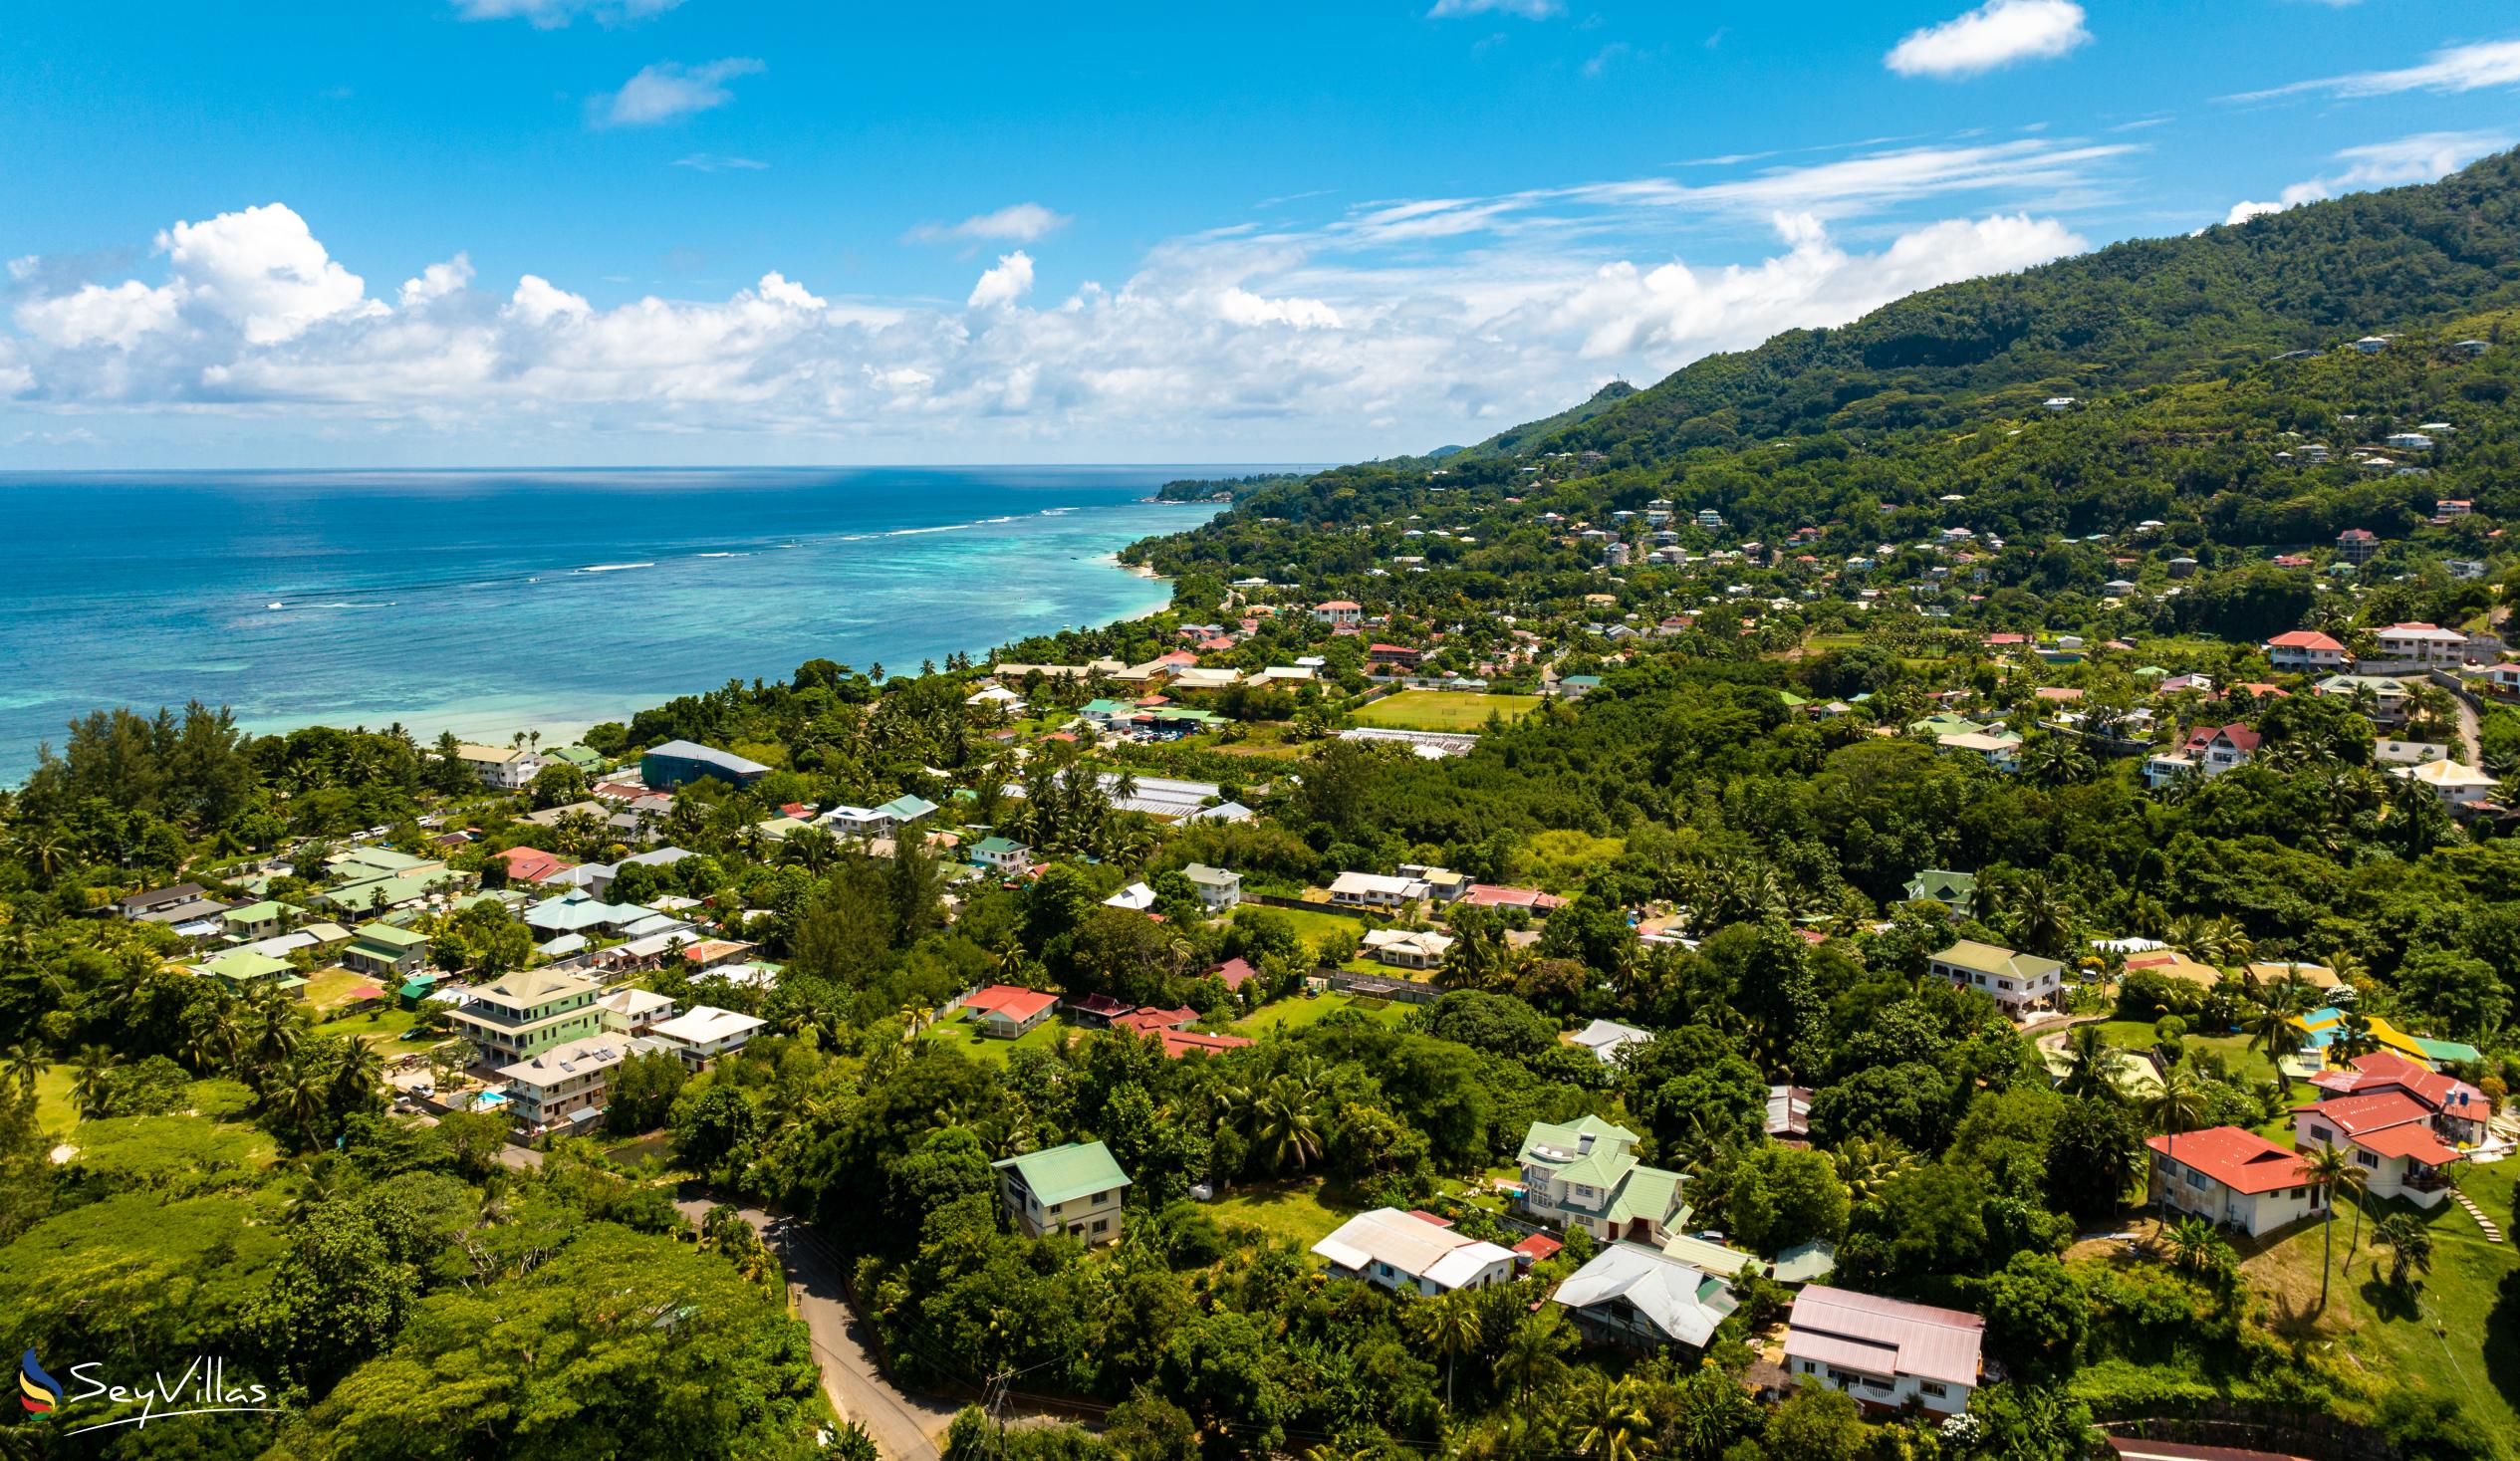 Foto 22: JAIDSS Holiday Apartments - Location - Mahé (Seychelles)